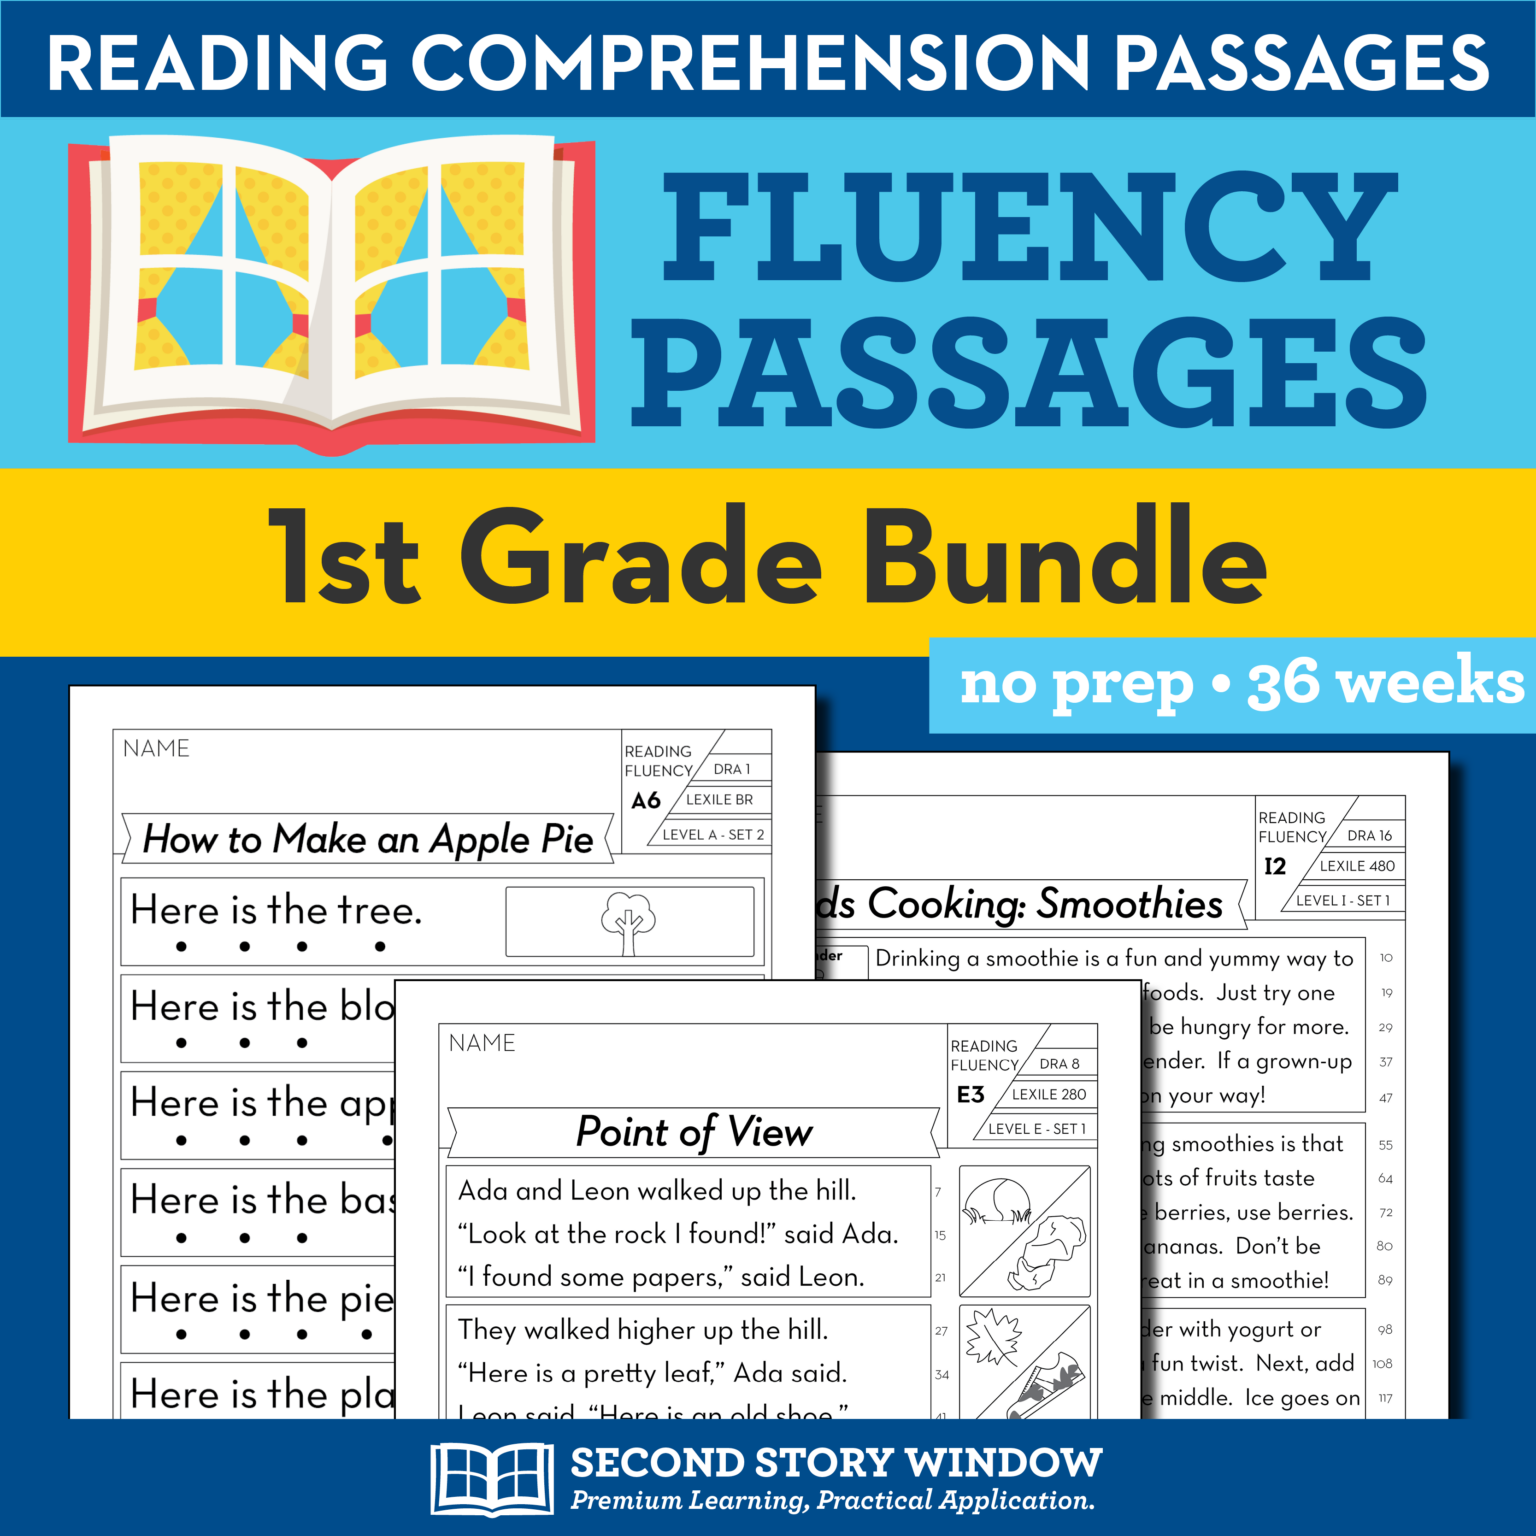 1st-grade-reading-fluency-passages-reading-comprehension-passages